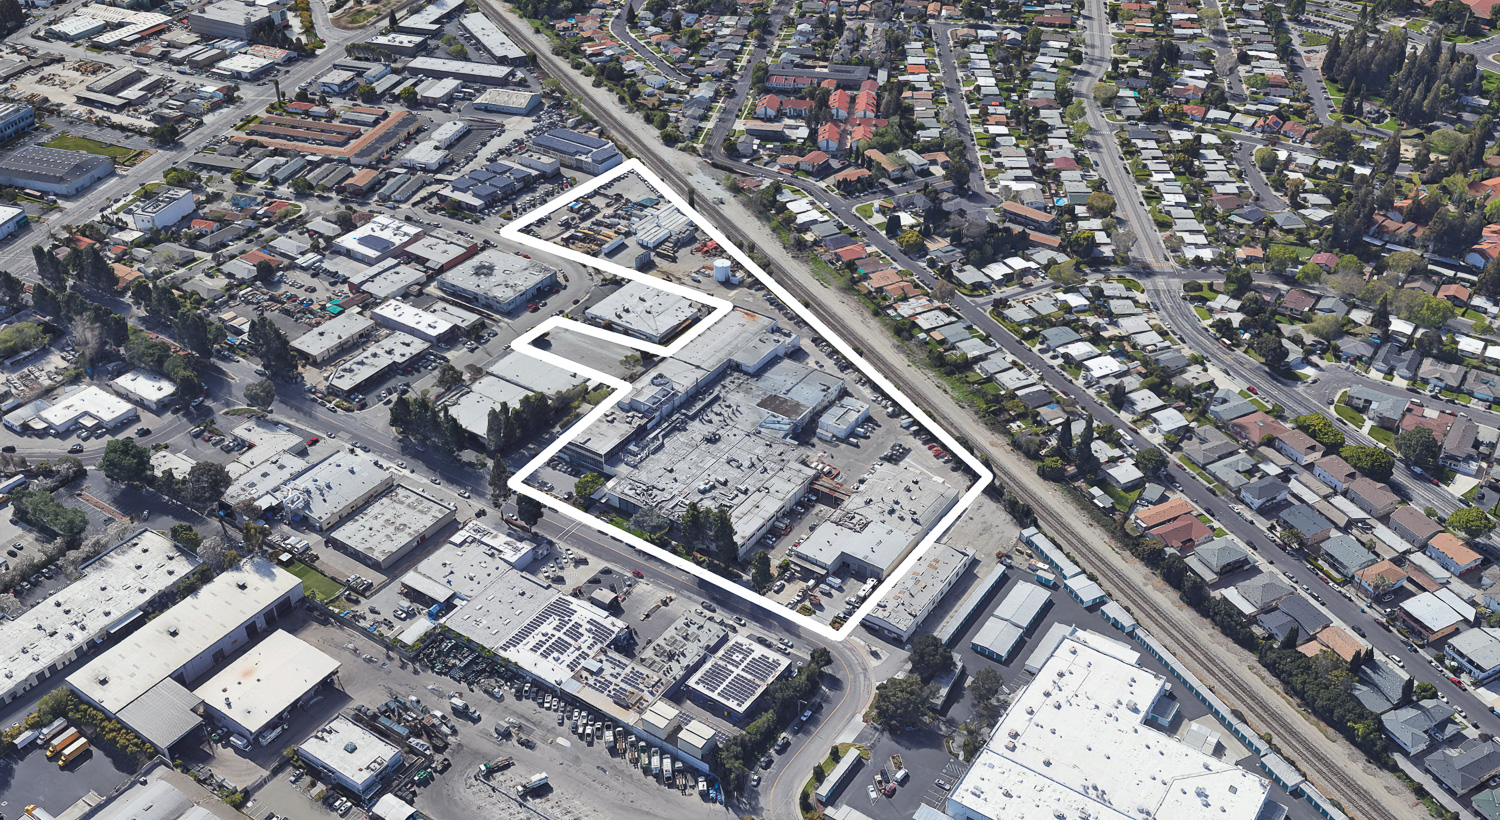 1200 Memorex Drive aerial view, image via Google Satellite